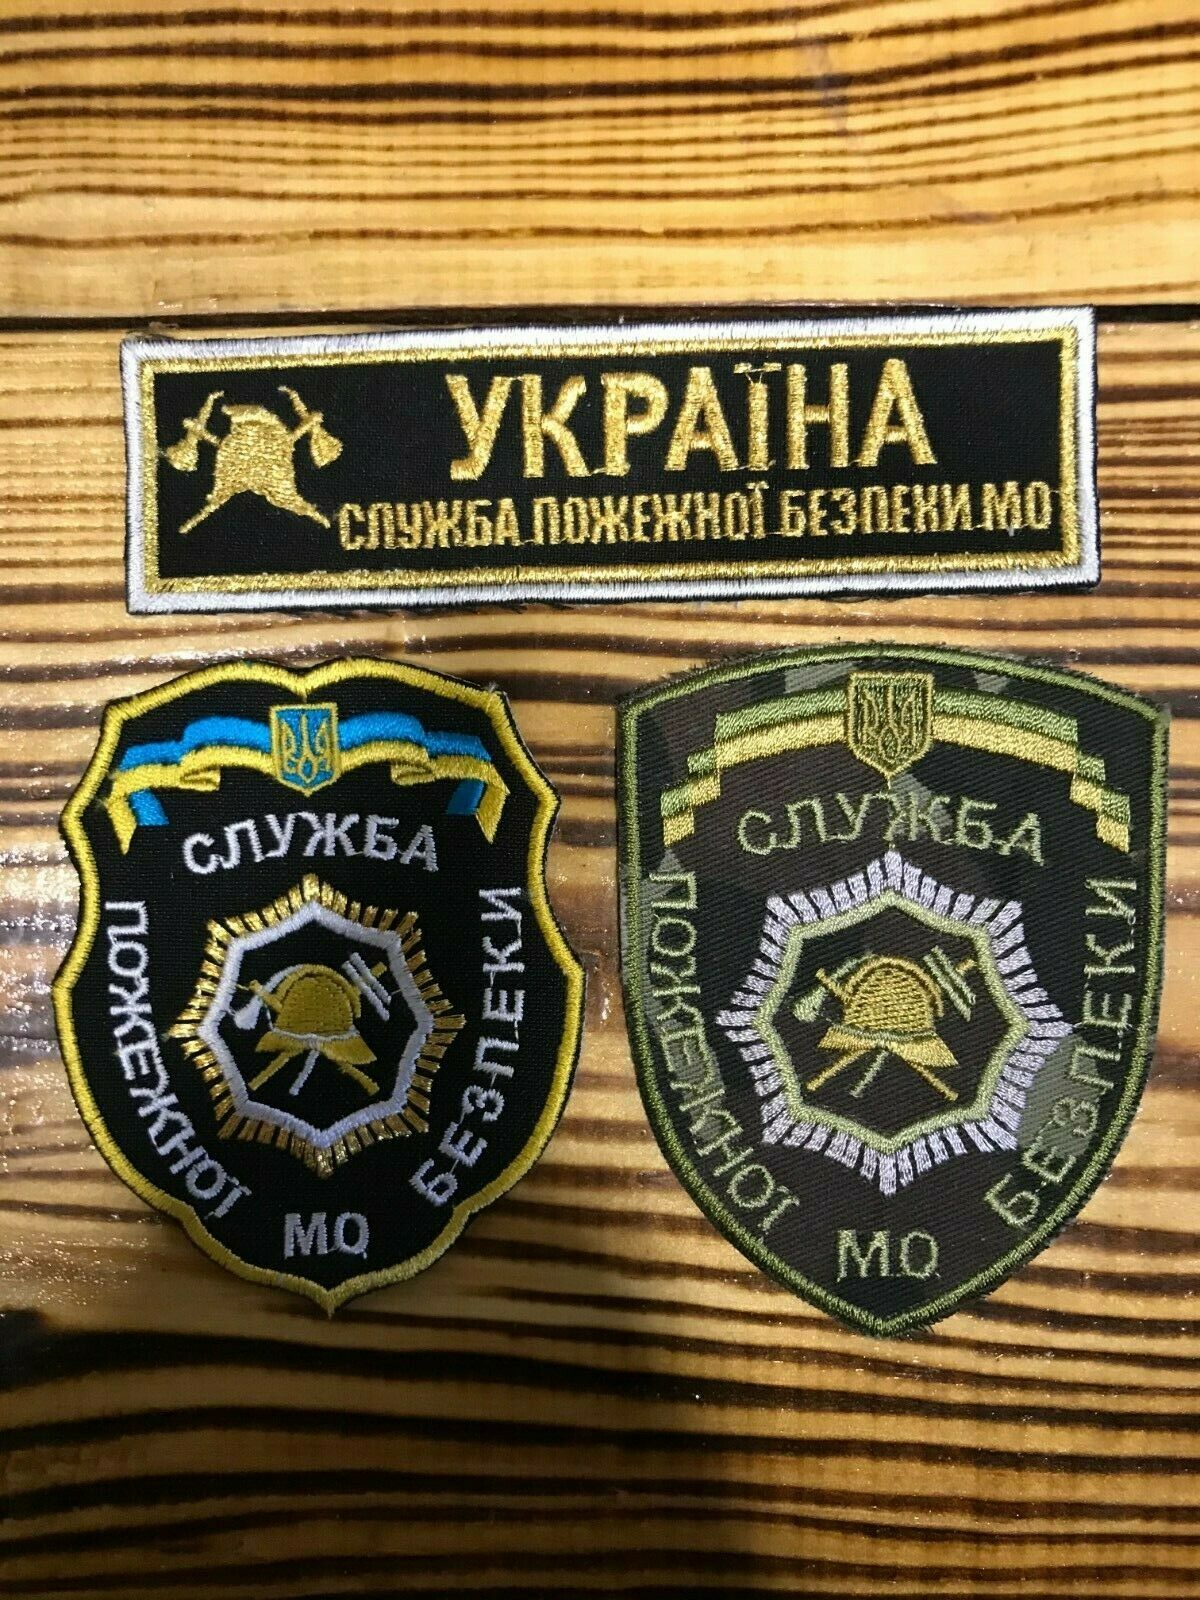 3 Ukraine Patch Fire Firefighter - Original! Current Style 2020